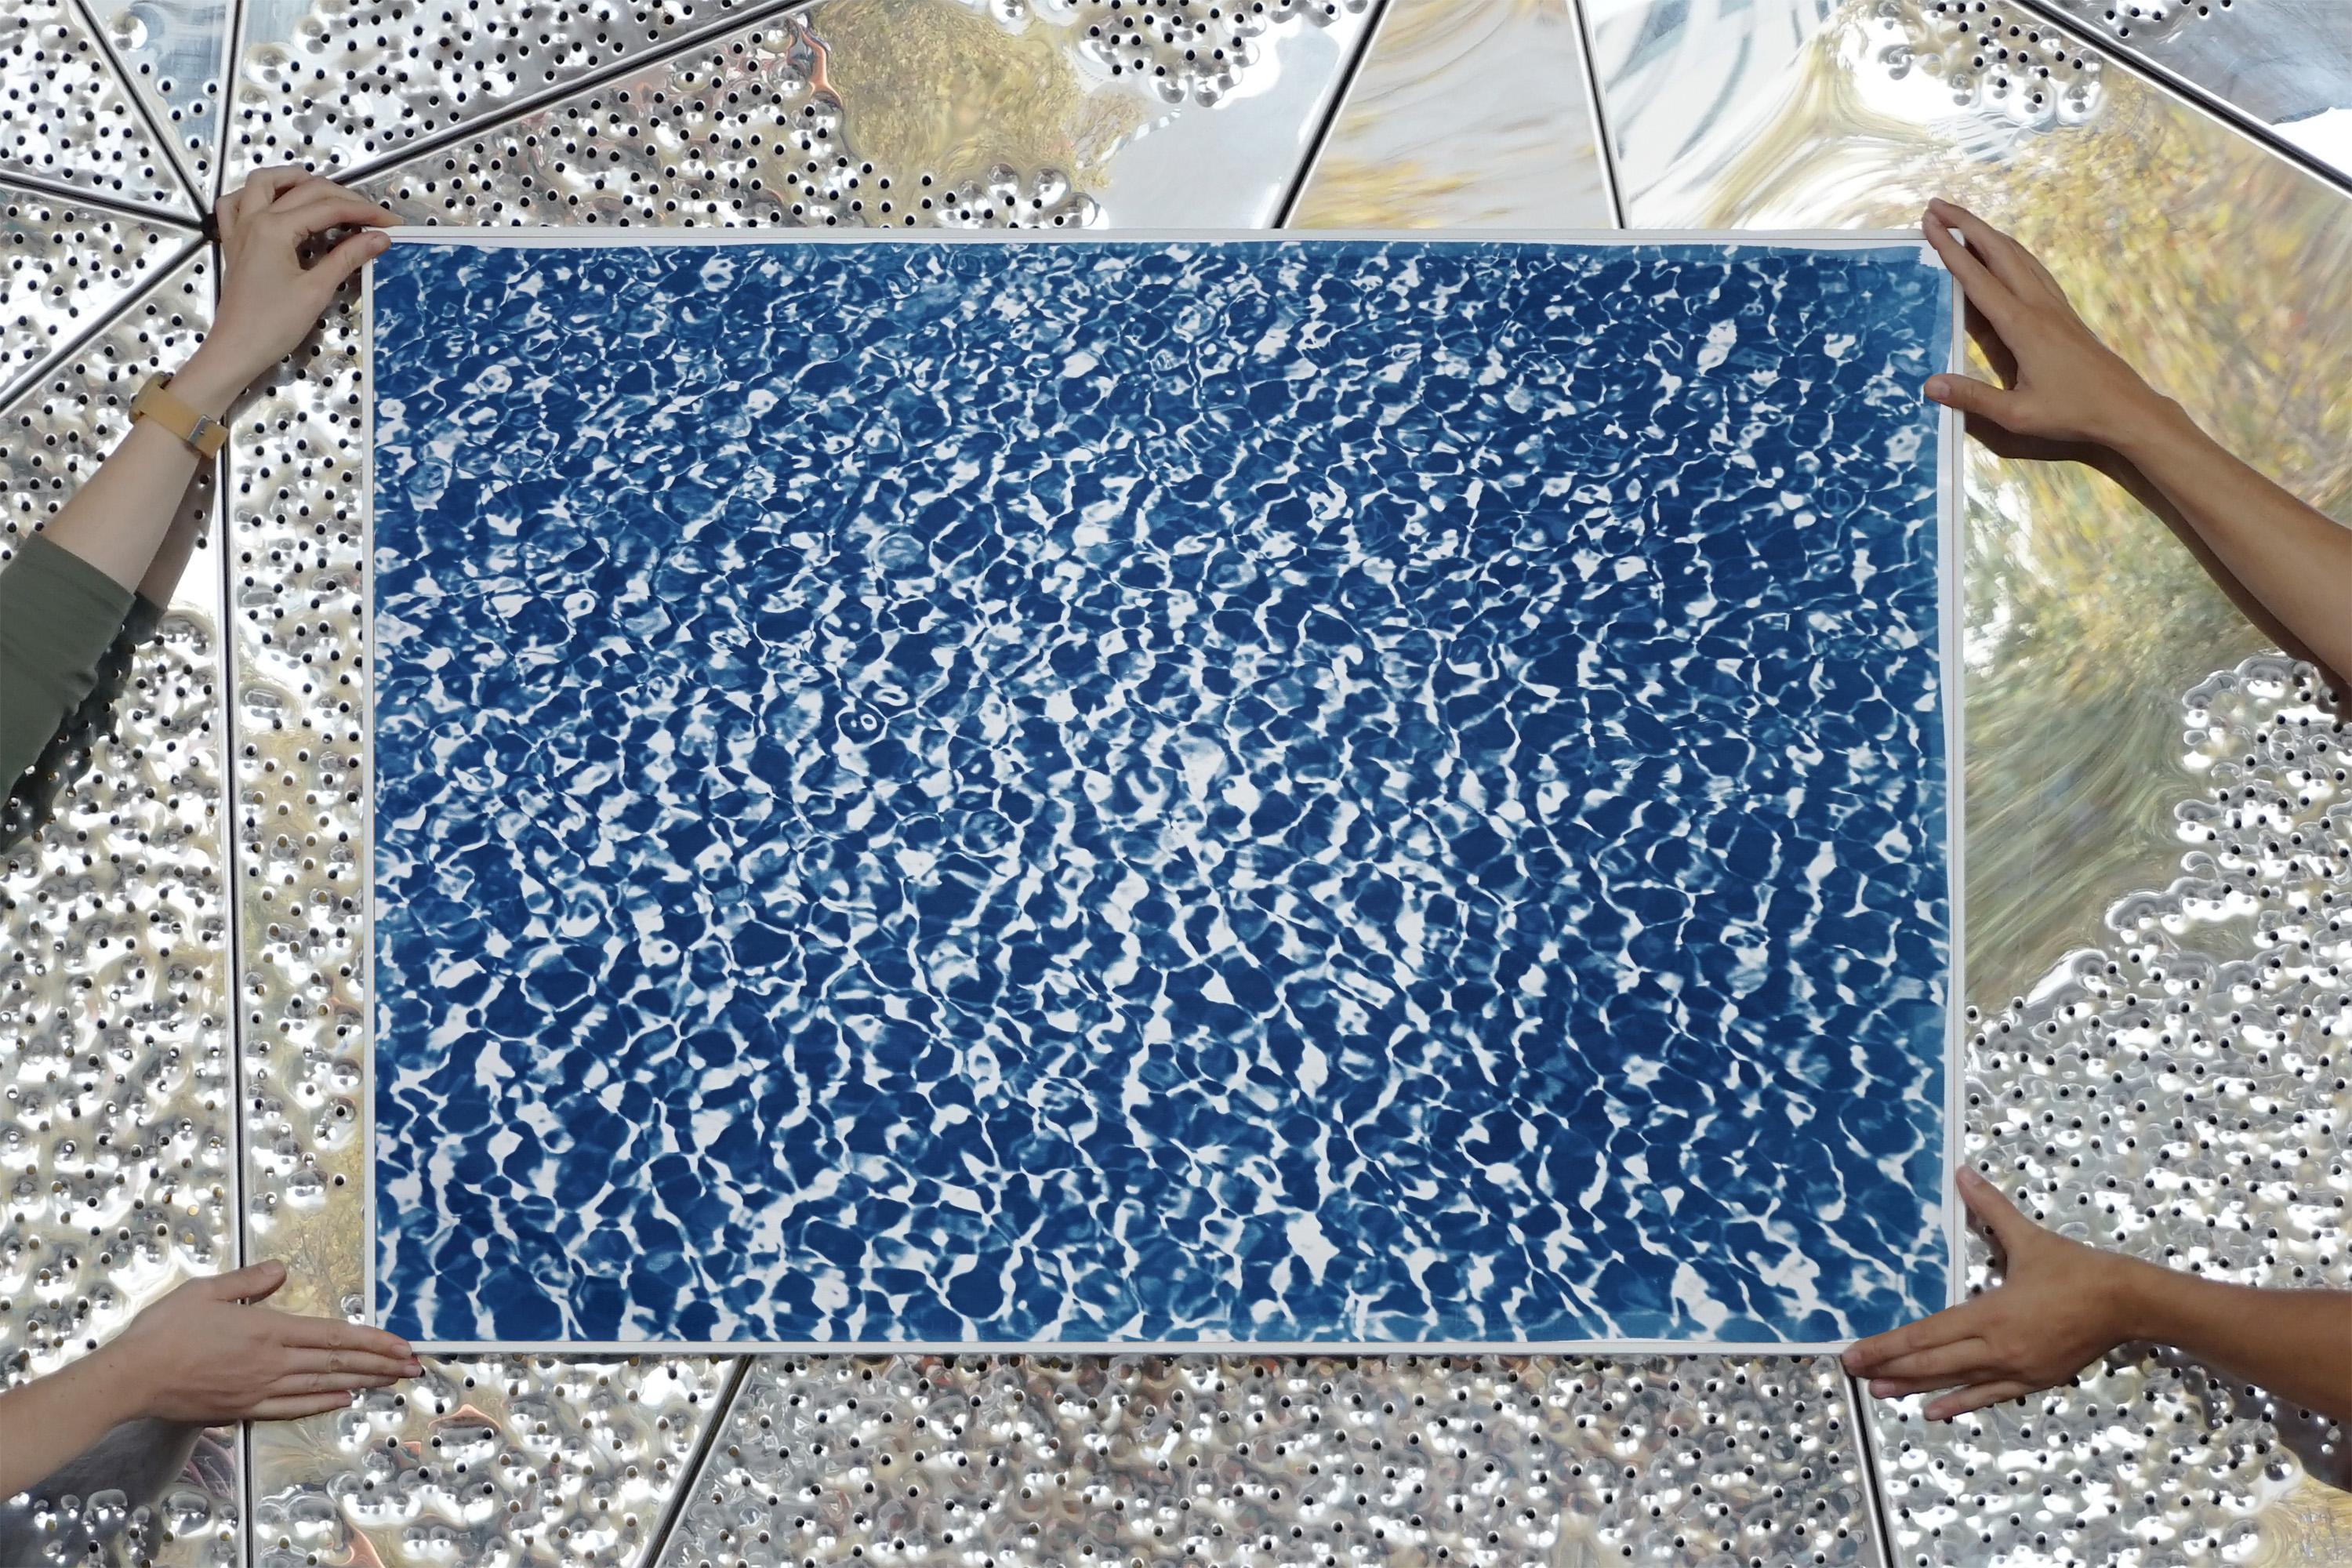 Infinity Pool Water Reflections, Blue & White Pattern, Handmade Cyanotype Print - Minimalist Photograph by Kind of Cyan